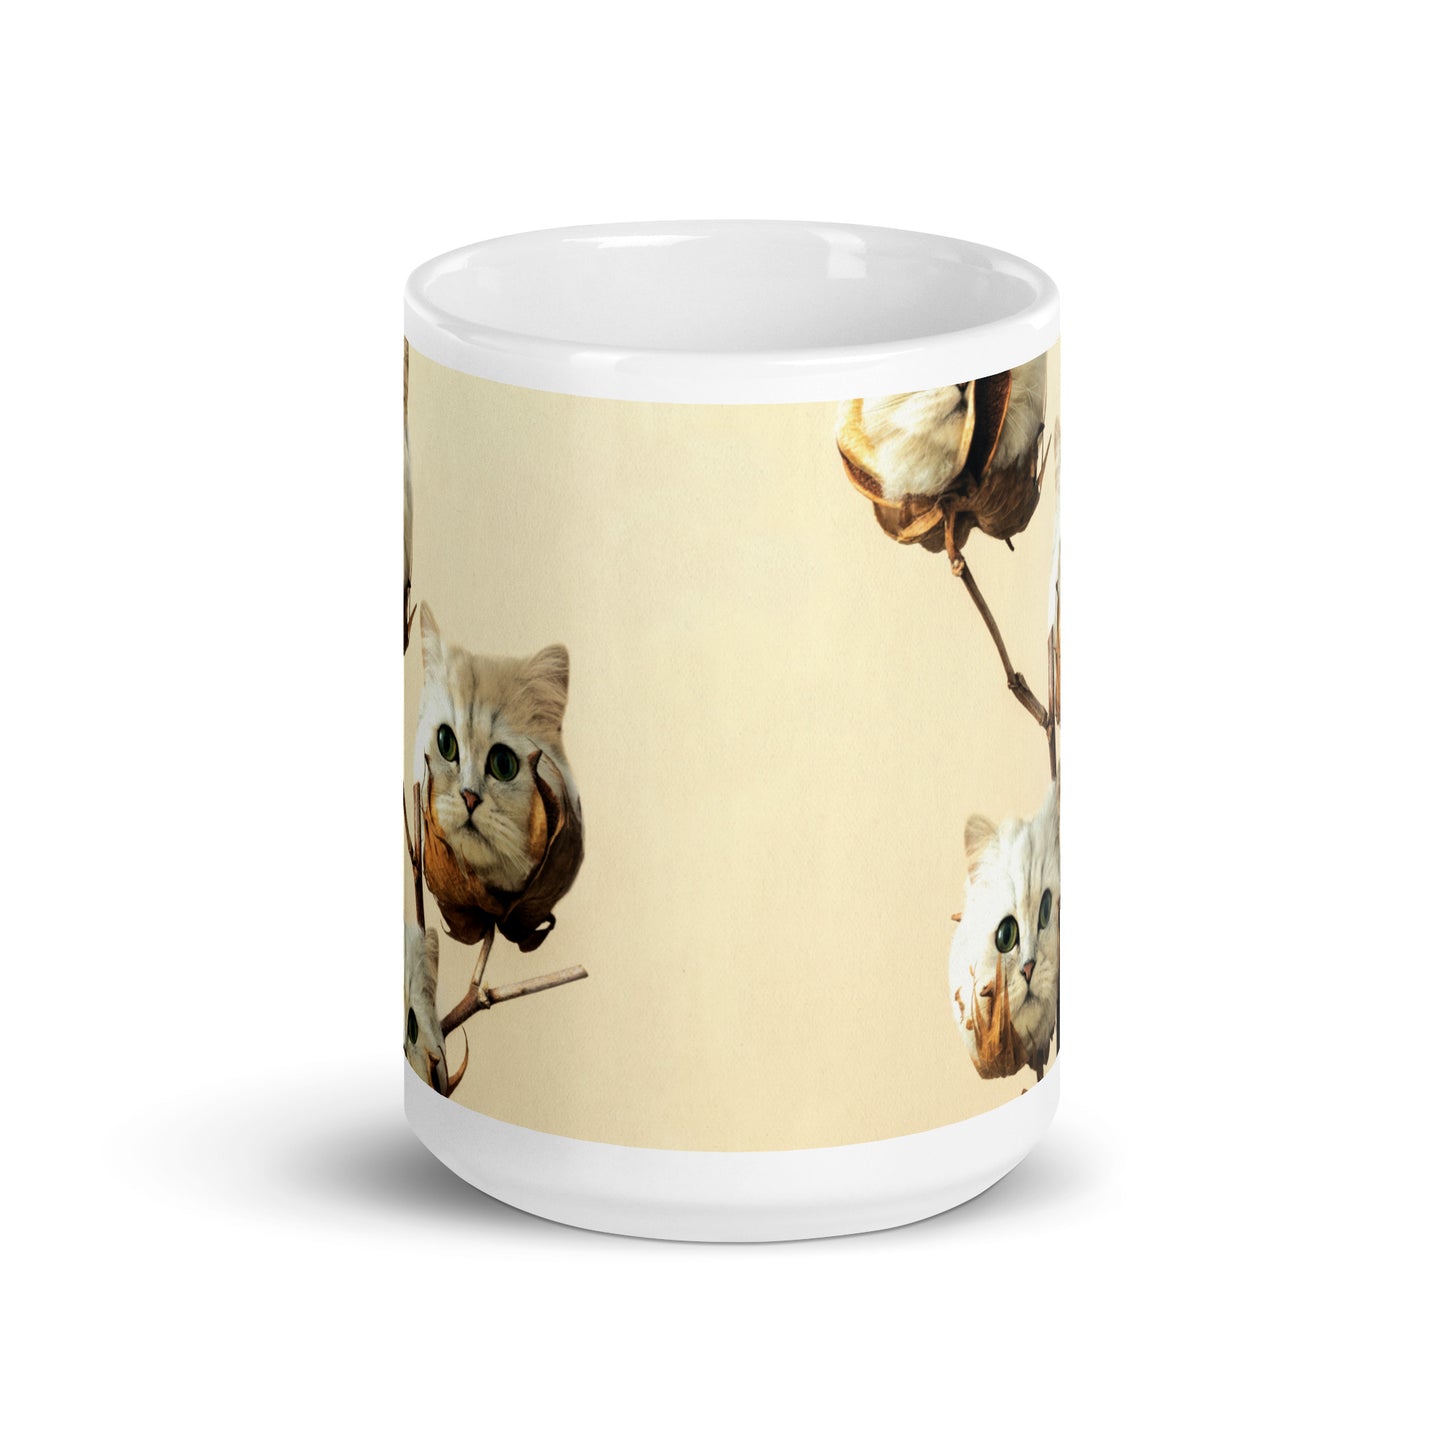 Cotton cats mug